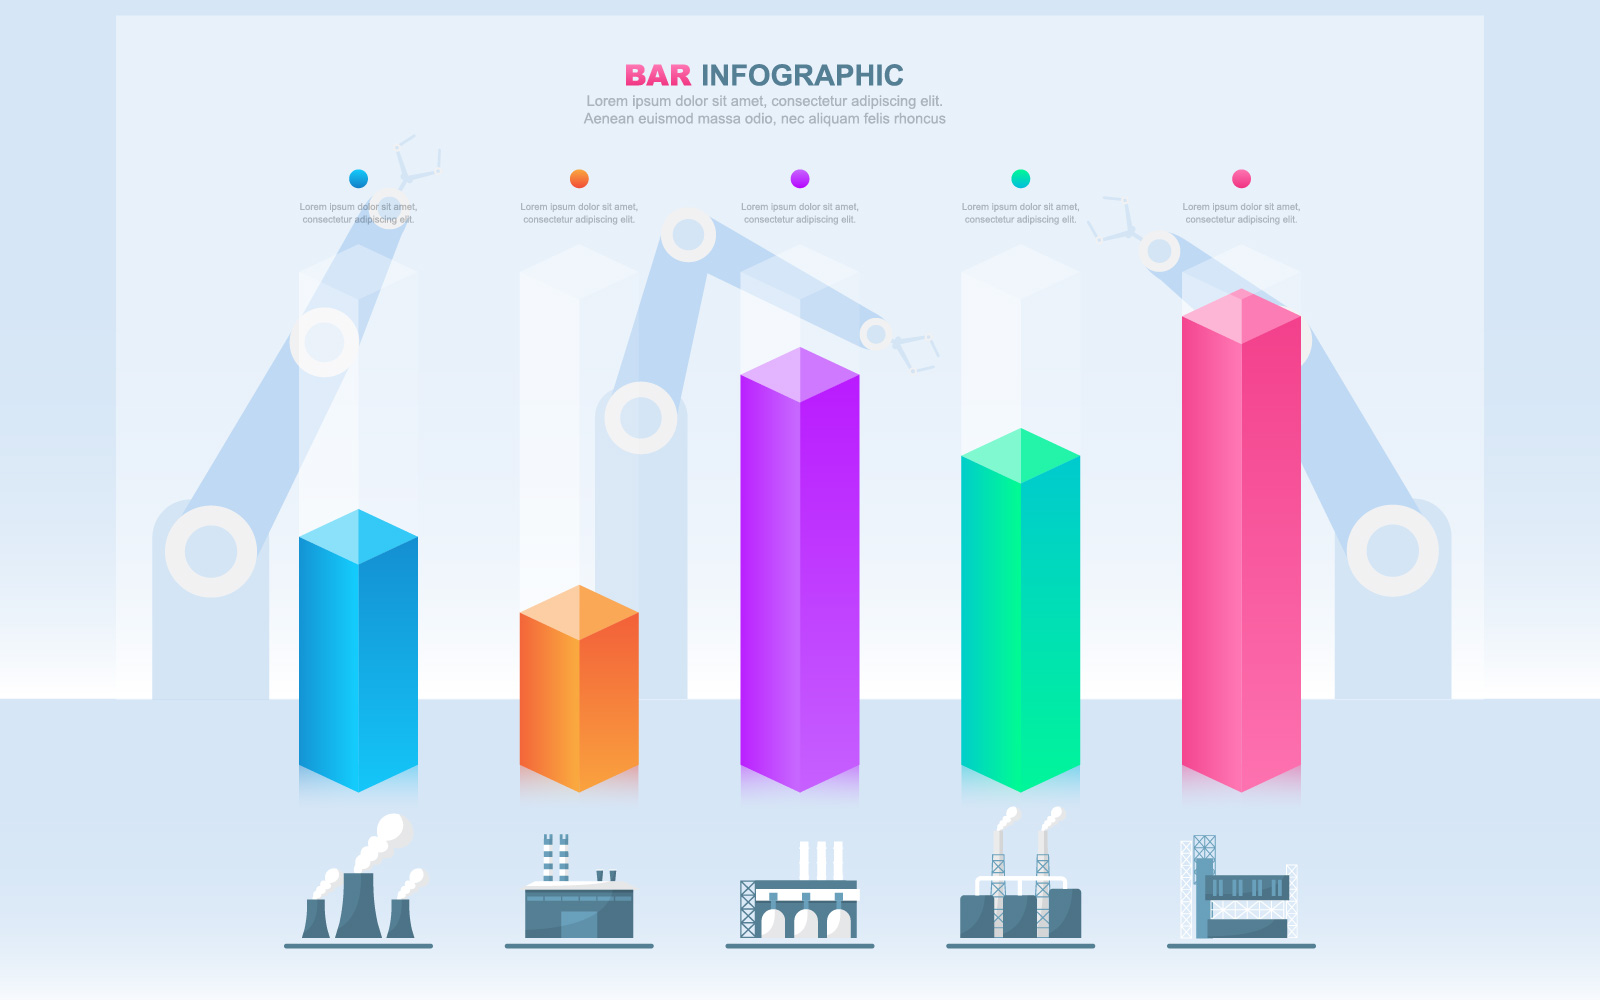 Infographic Elements